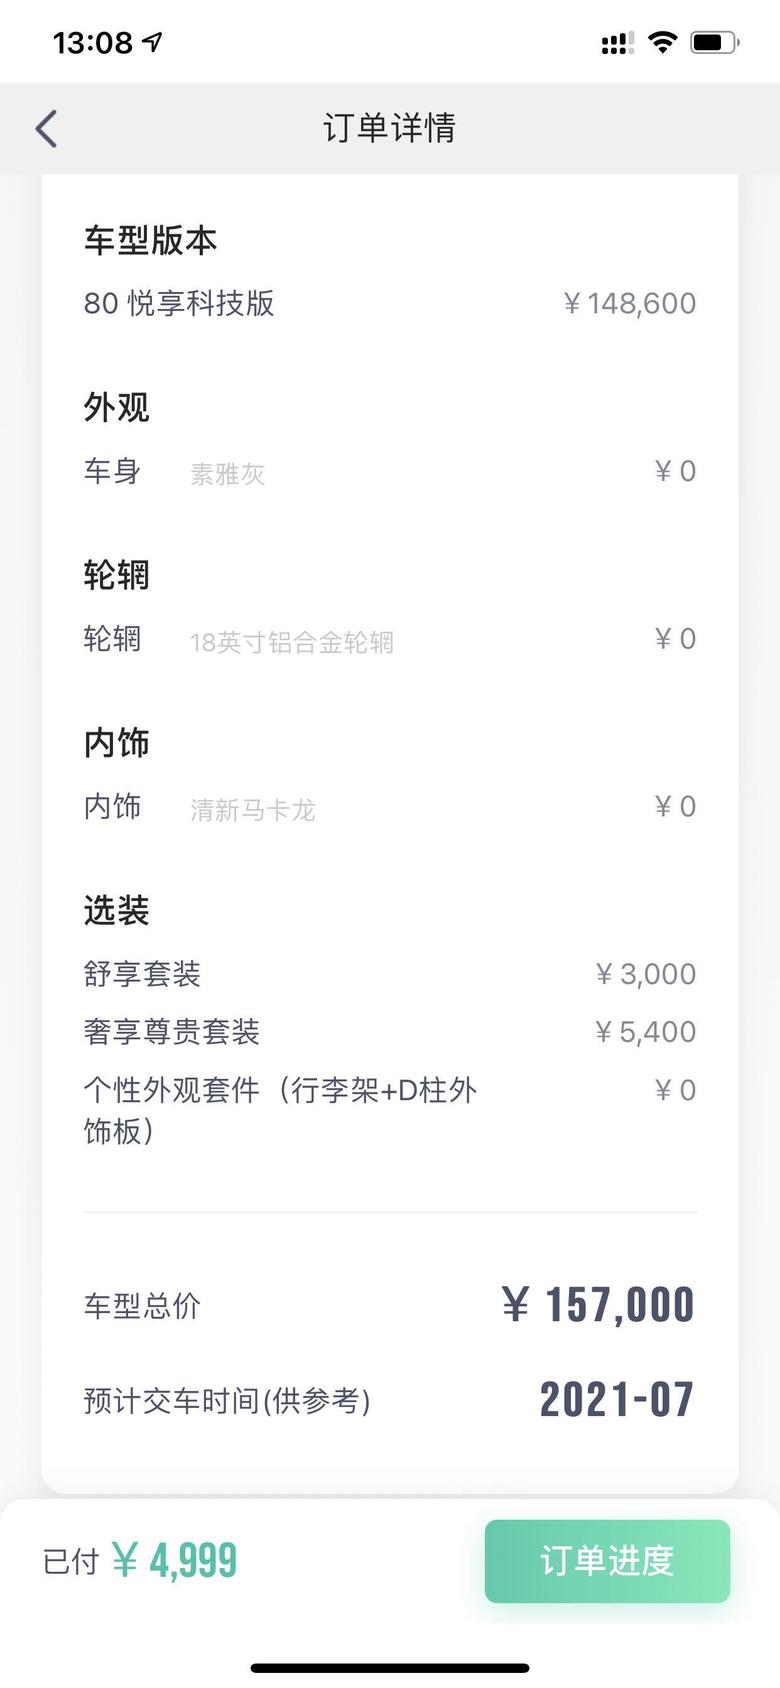 aion y转让上海地区aionY订单80科技版7月提车，现在4000转让